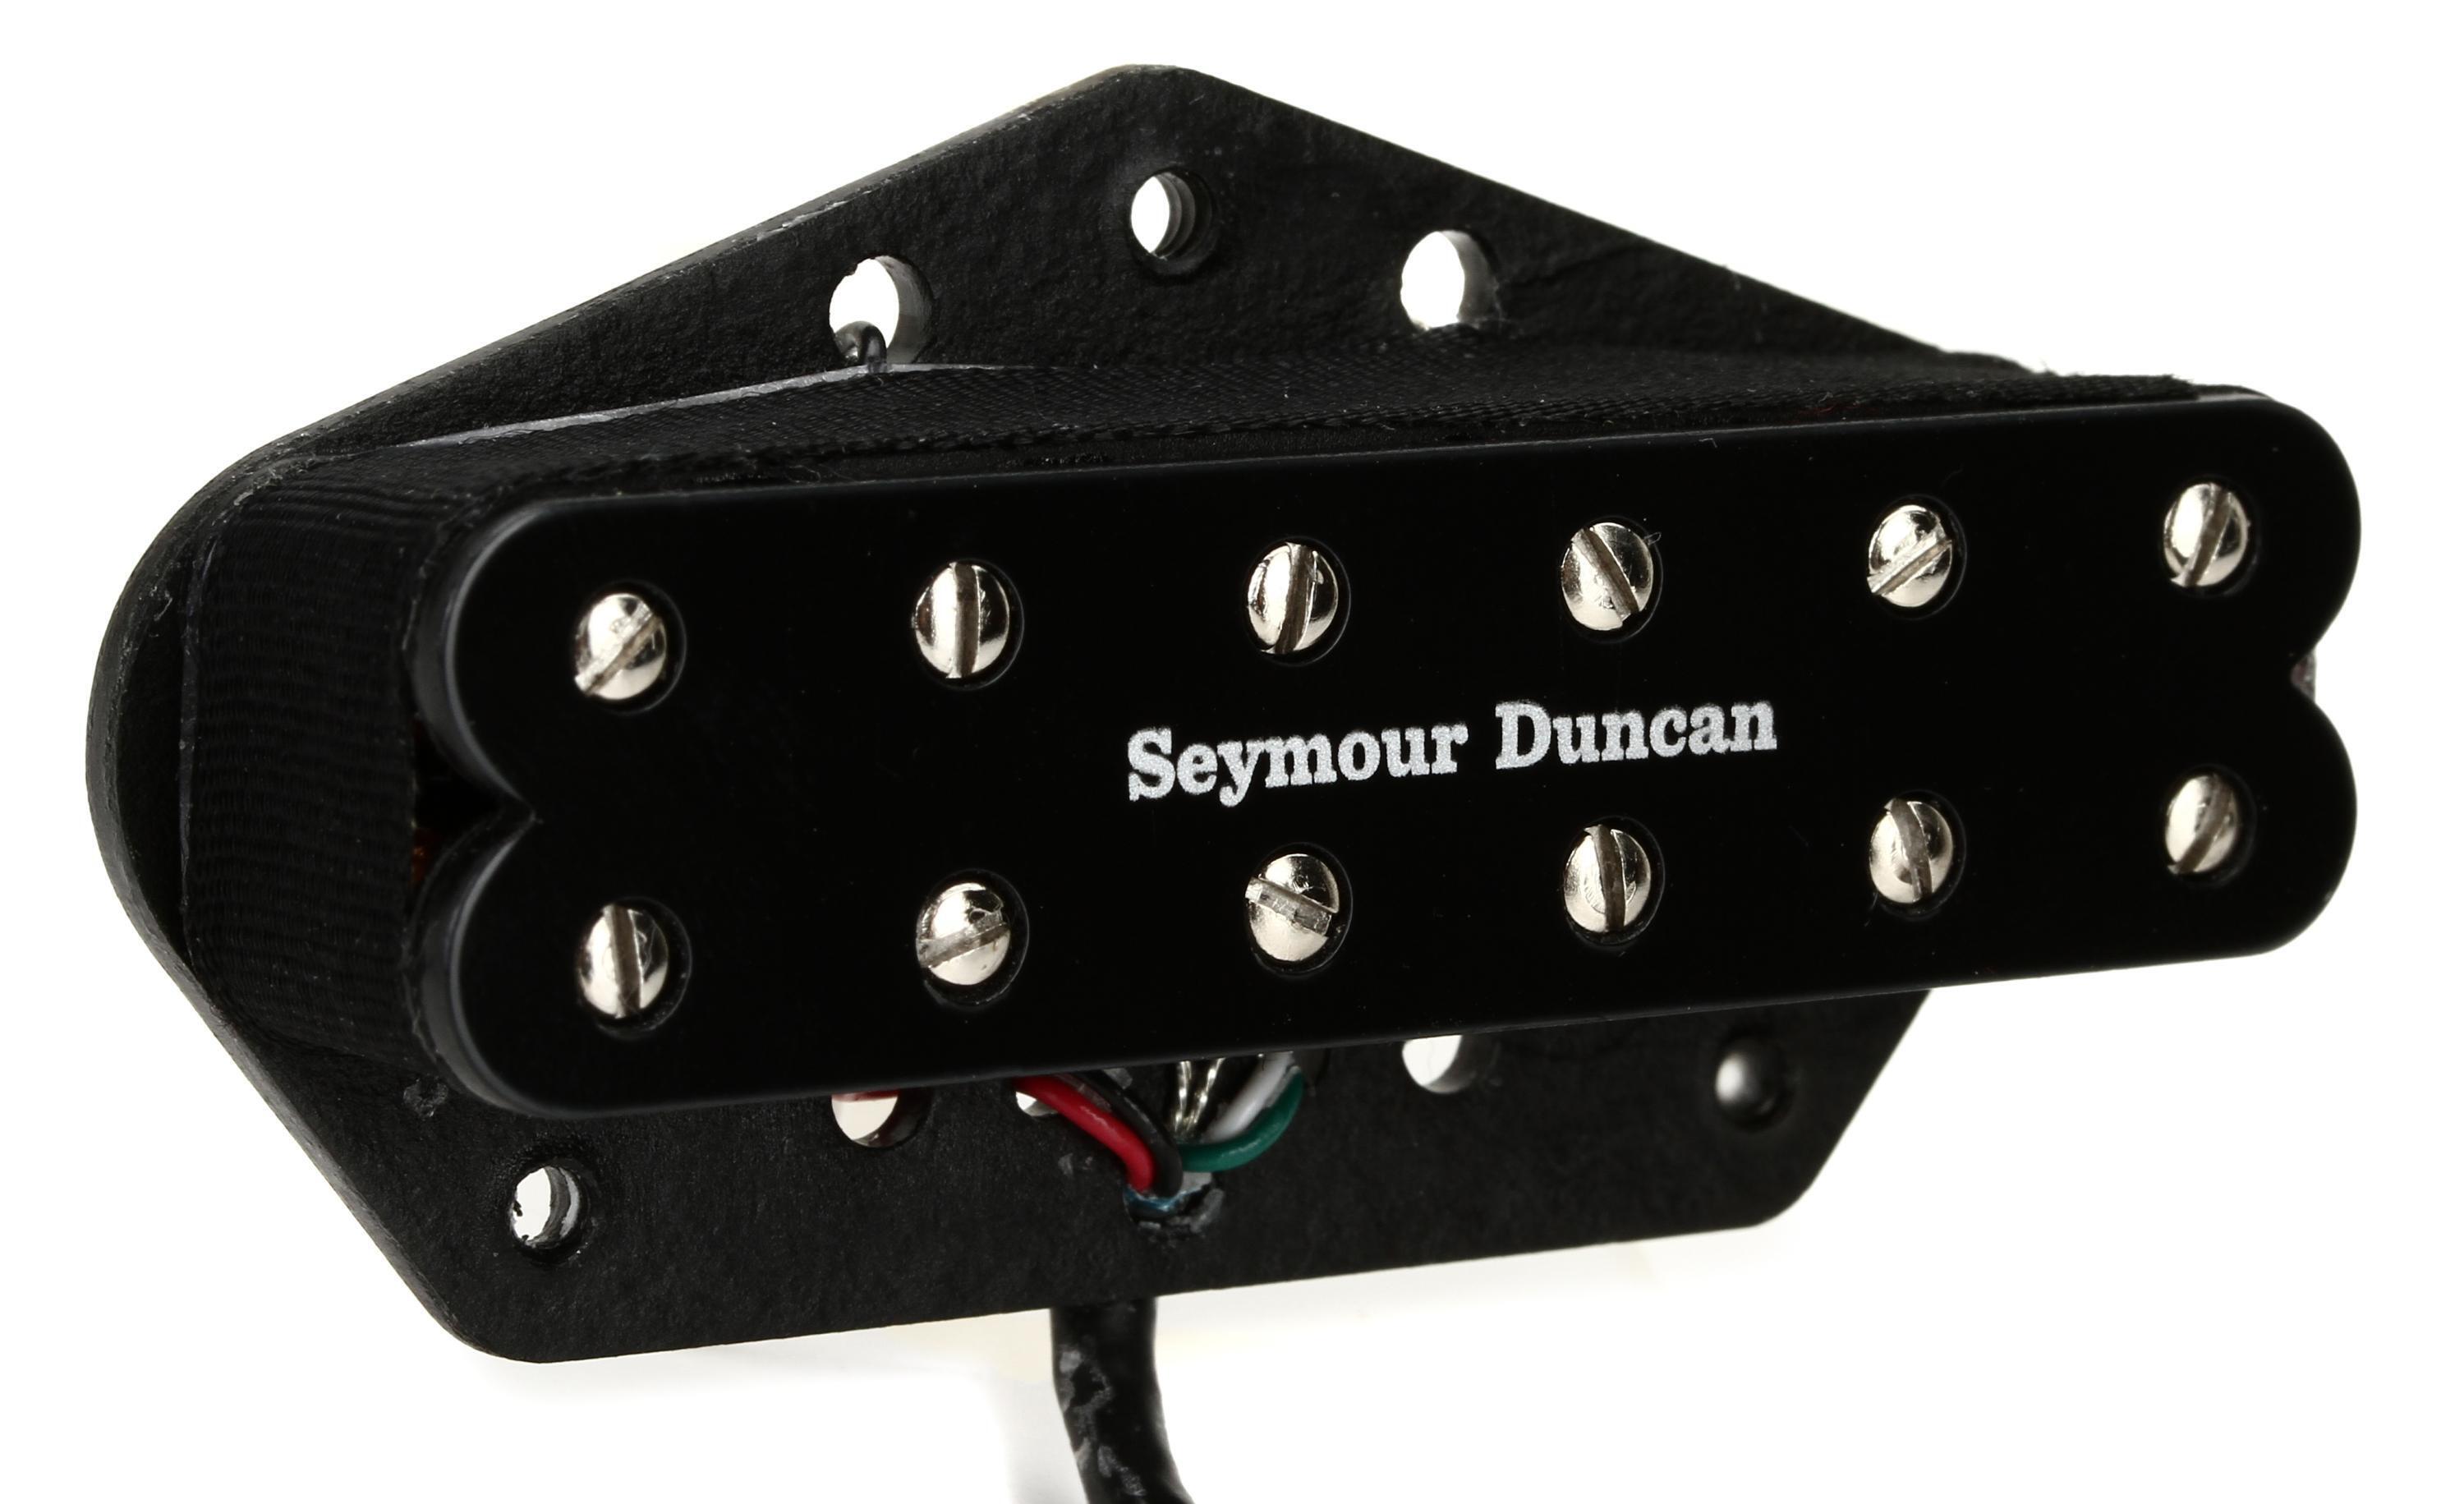 Seymour Duncan ST59-1 Little '59 Bridge Humbucker Tele Pickup - Black